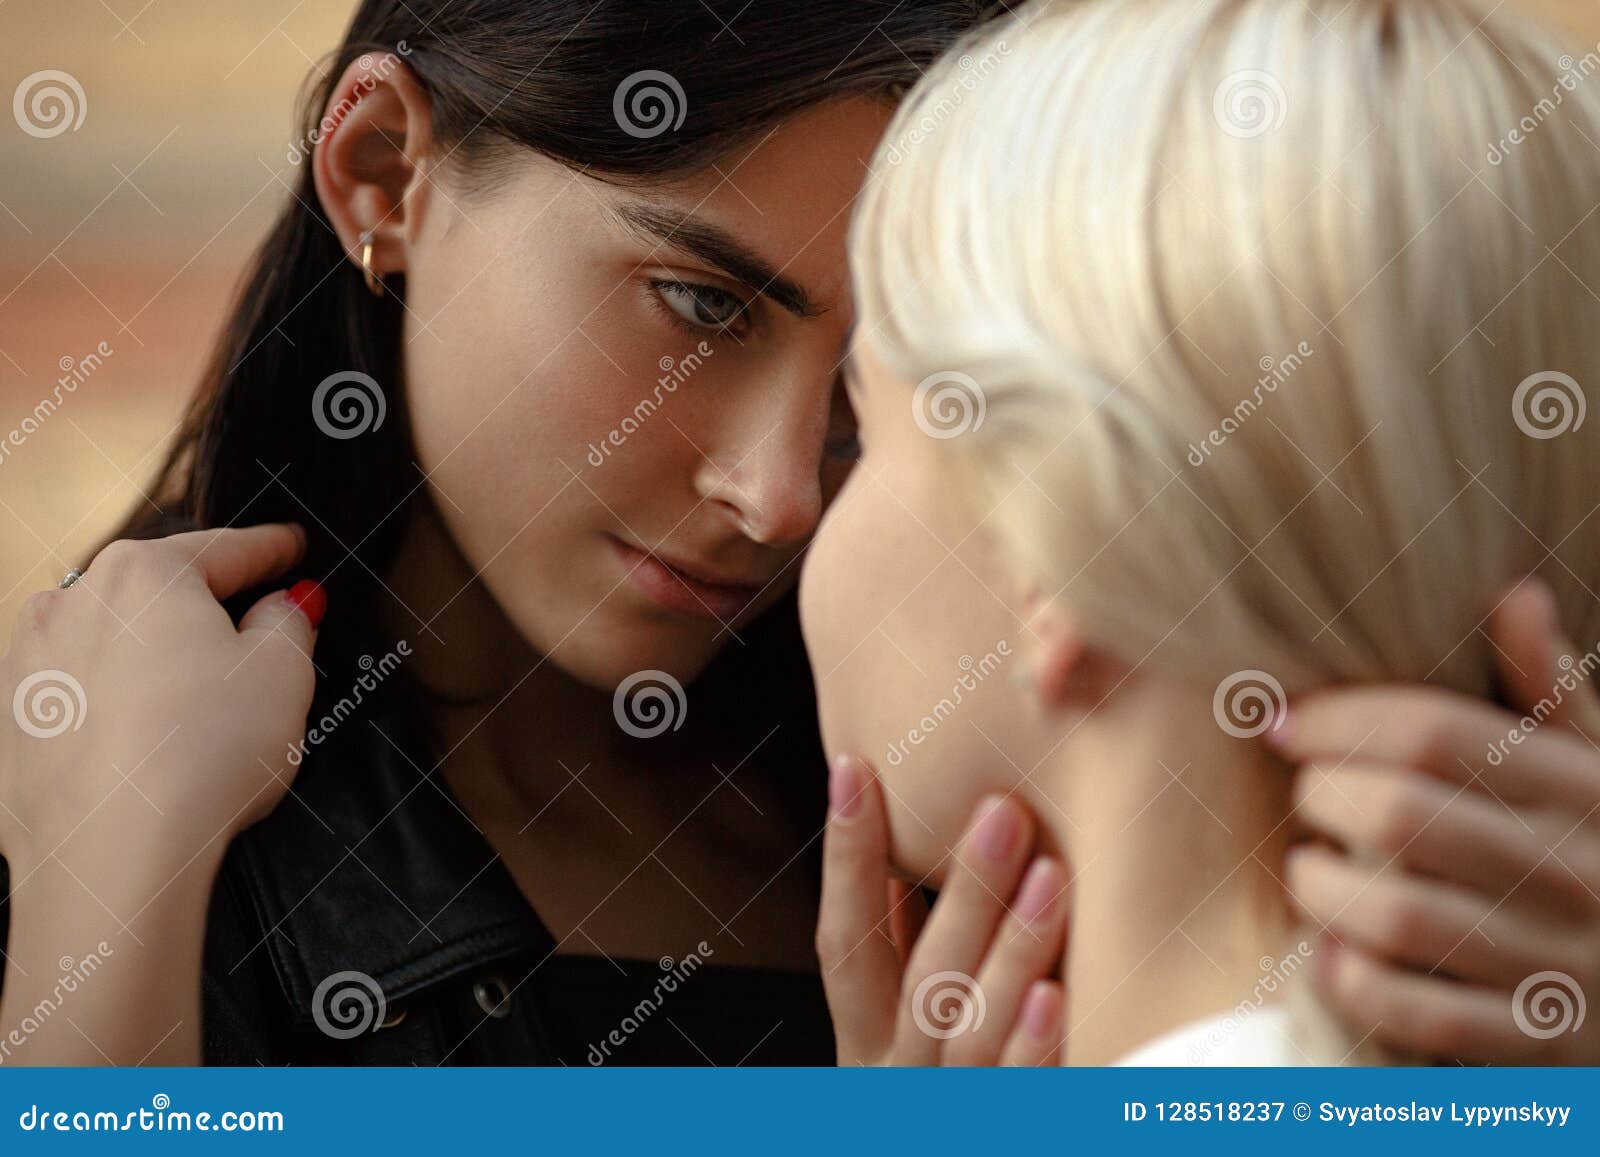 Lesbian Kissing Random Girls